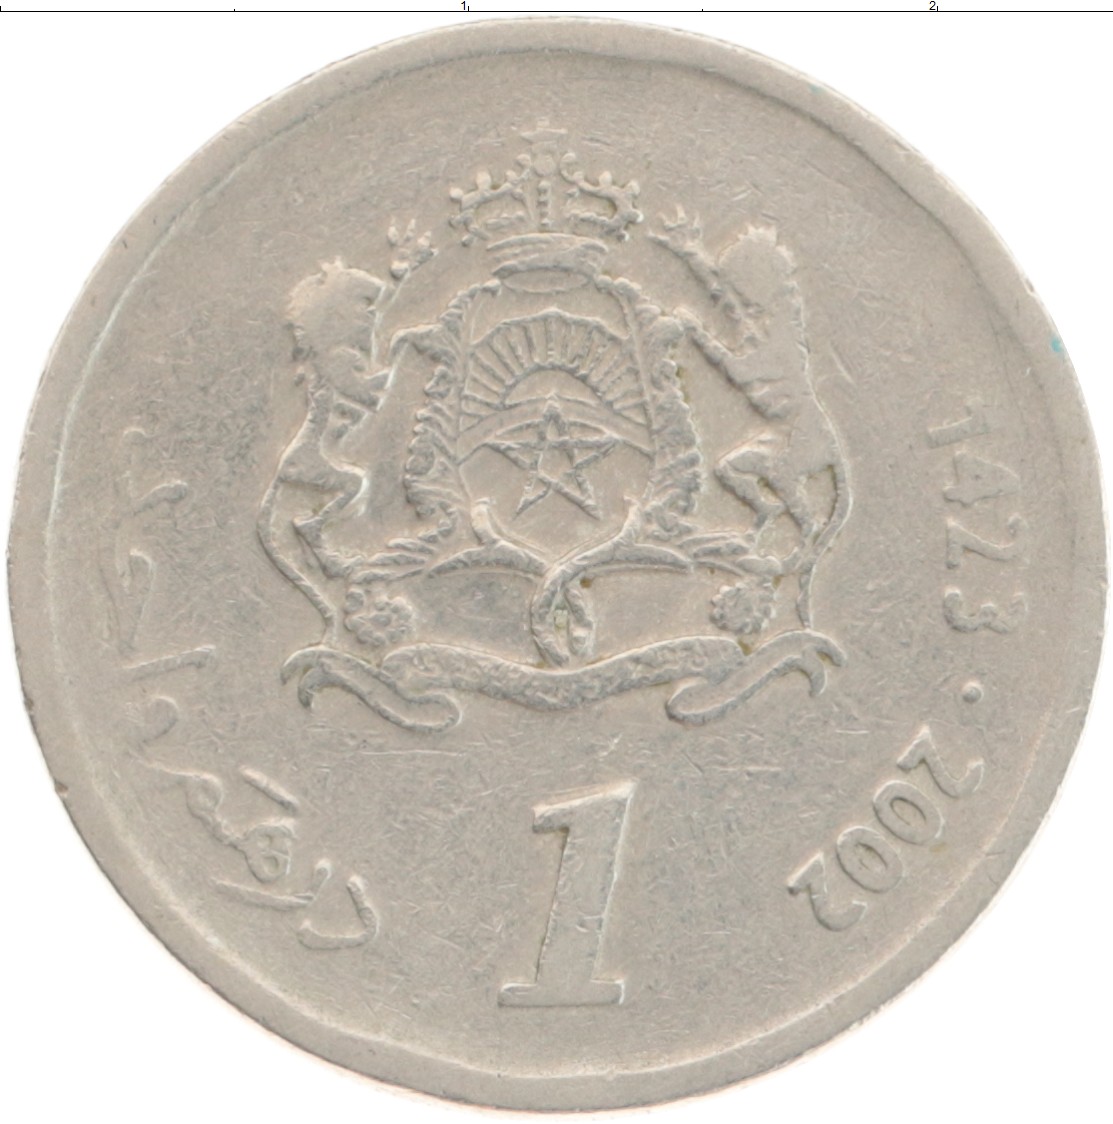 3 дирхама. 1/2 Дирхама 2002 Марокко. Мороканскаямтнета1. Монеты Марокко. Два дирхама монета.